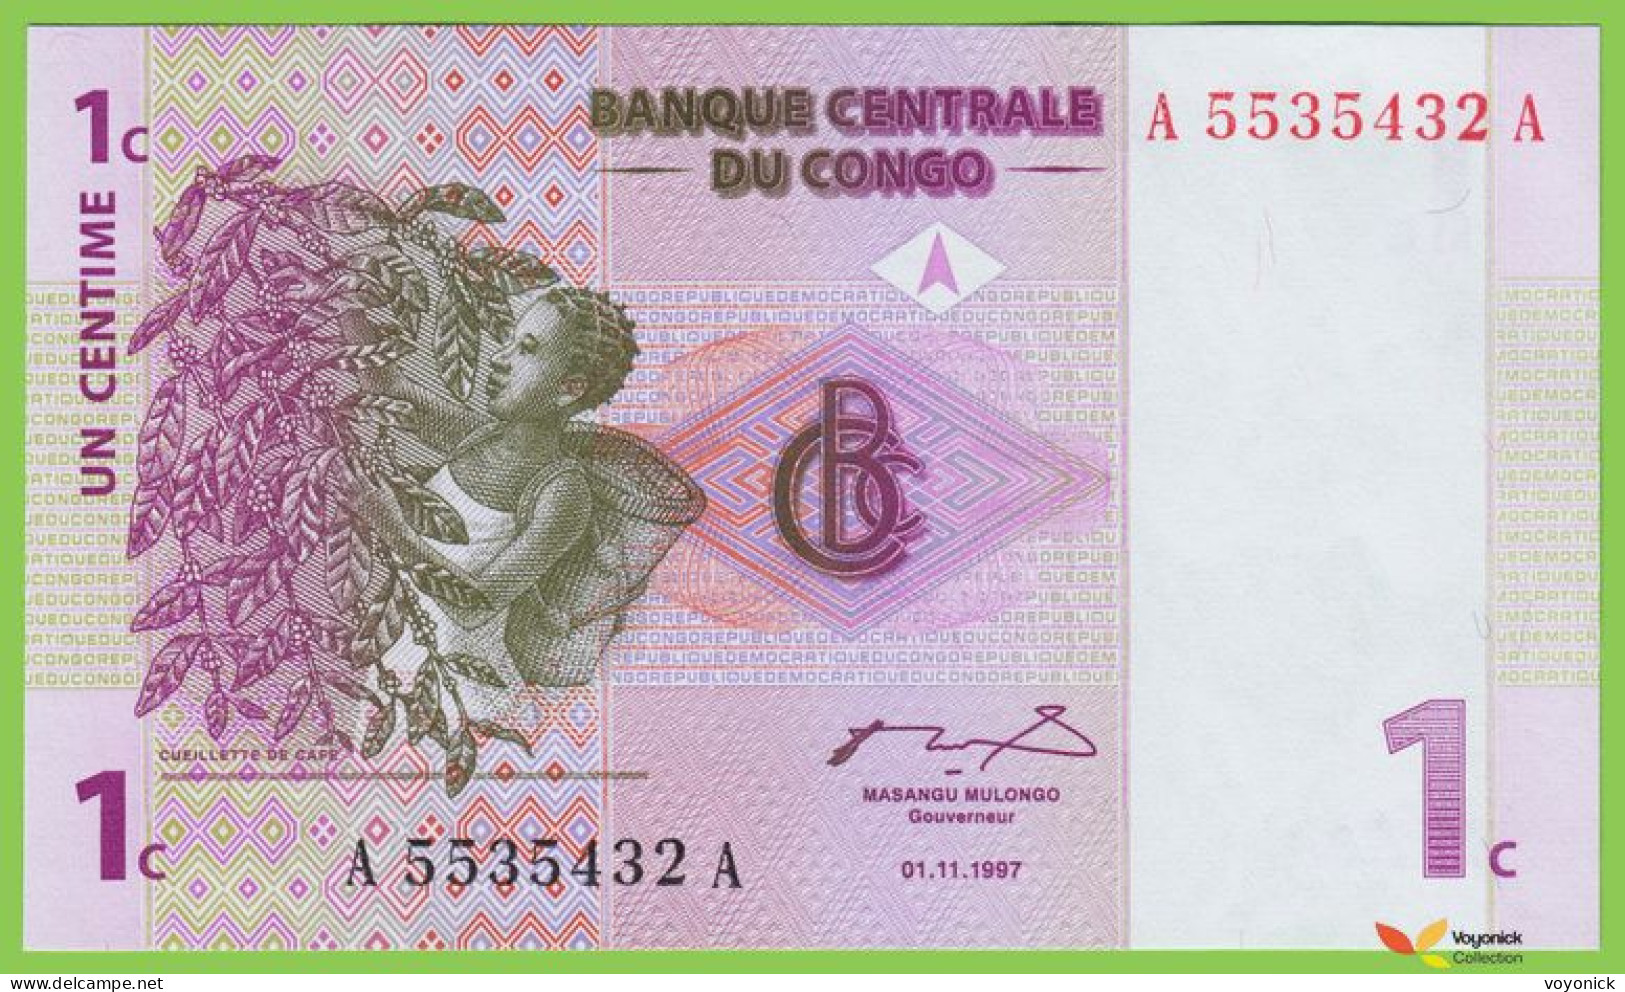 Voyo CONGO 1 Centime 1997 P80a  B301a Prefix A Surfix A UNC Coffee  Volcano - Republic Of Congo (Congo-Brazzaville)